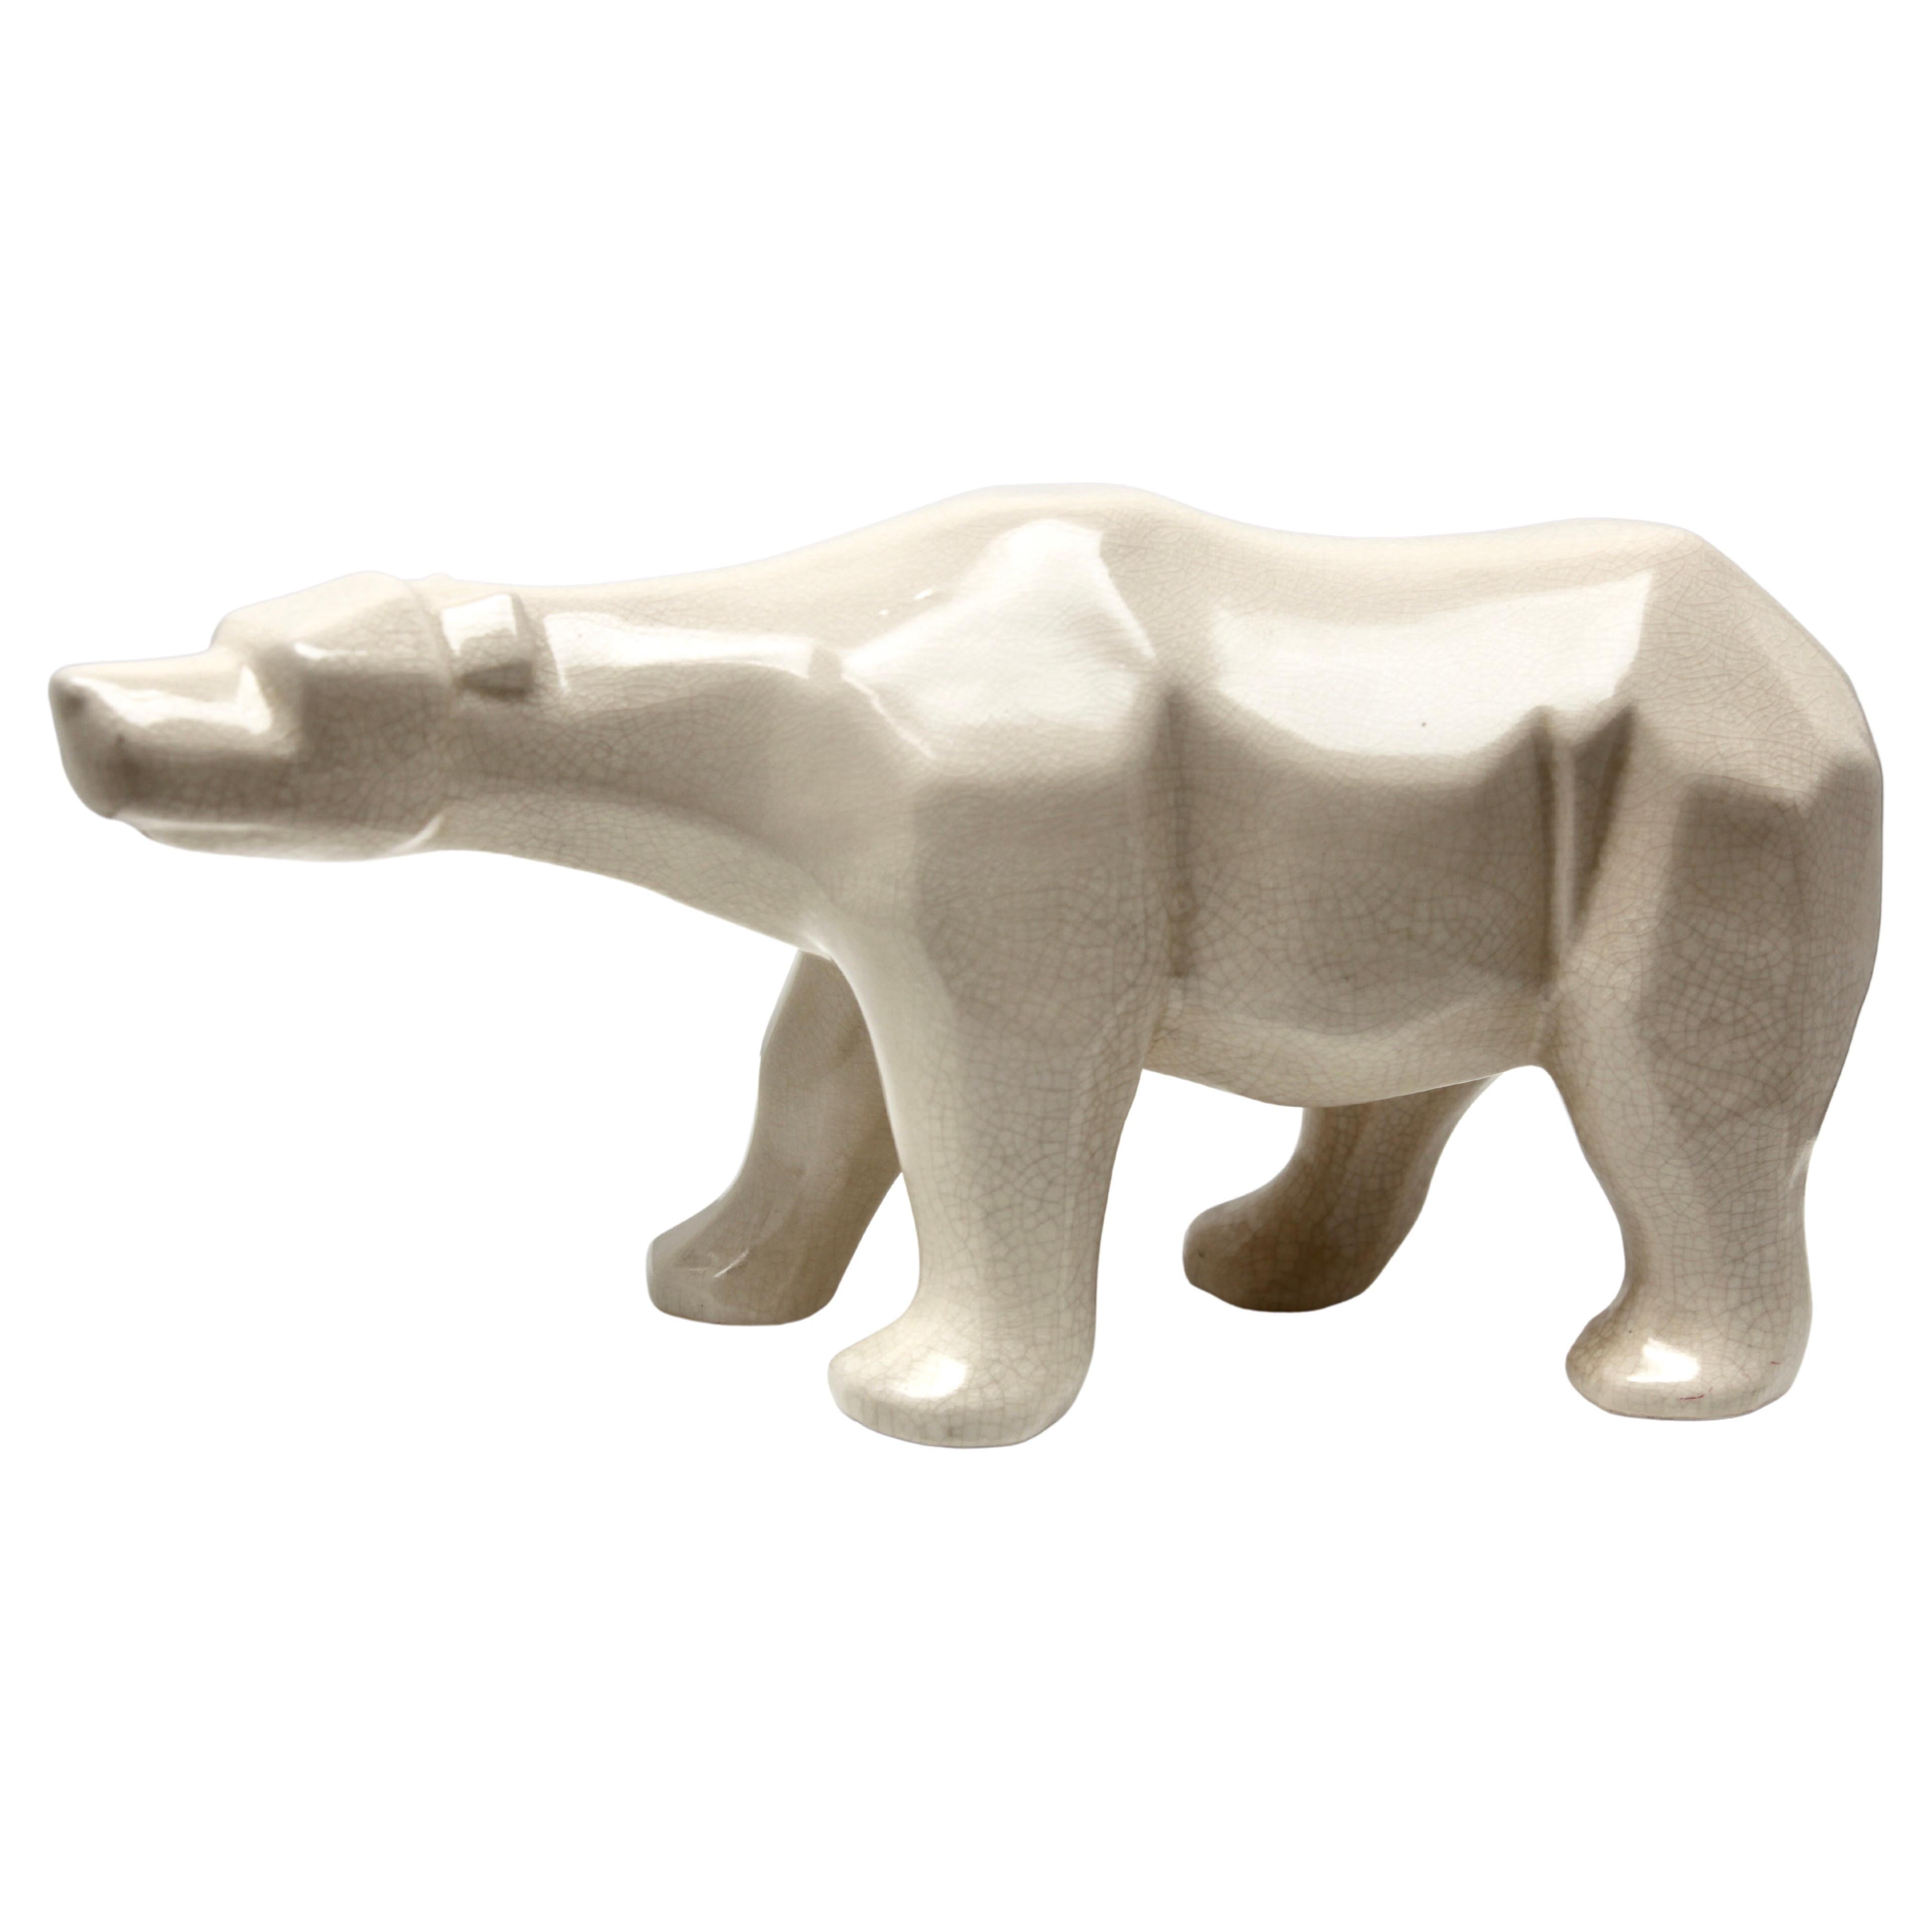 Cubist Style Polar Bear Whit a Crackle Glaze Ceramic Finish, Stamp L&V Ceram